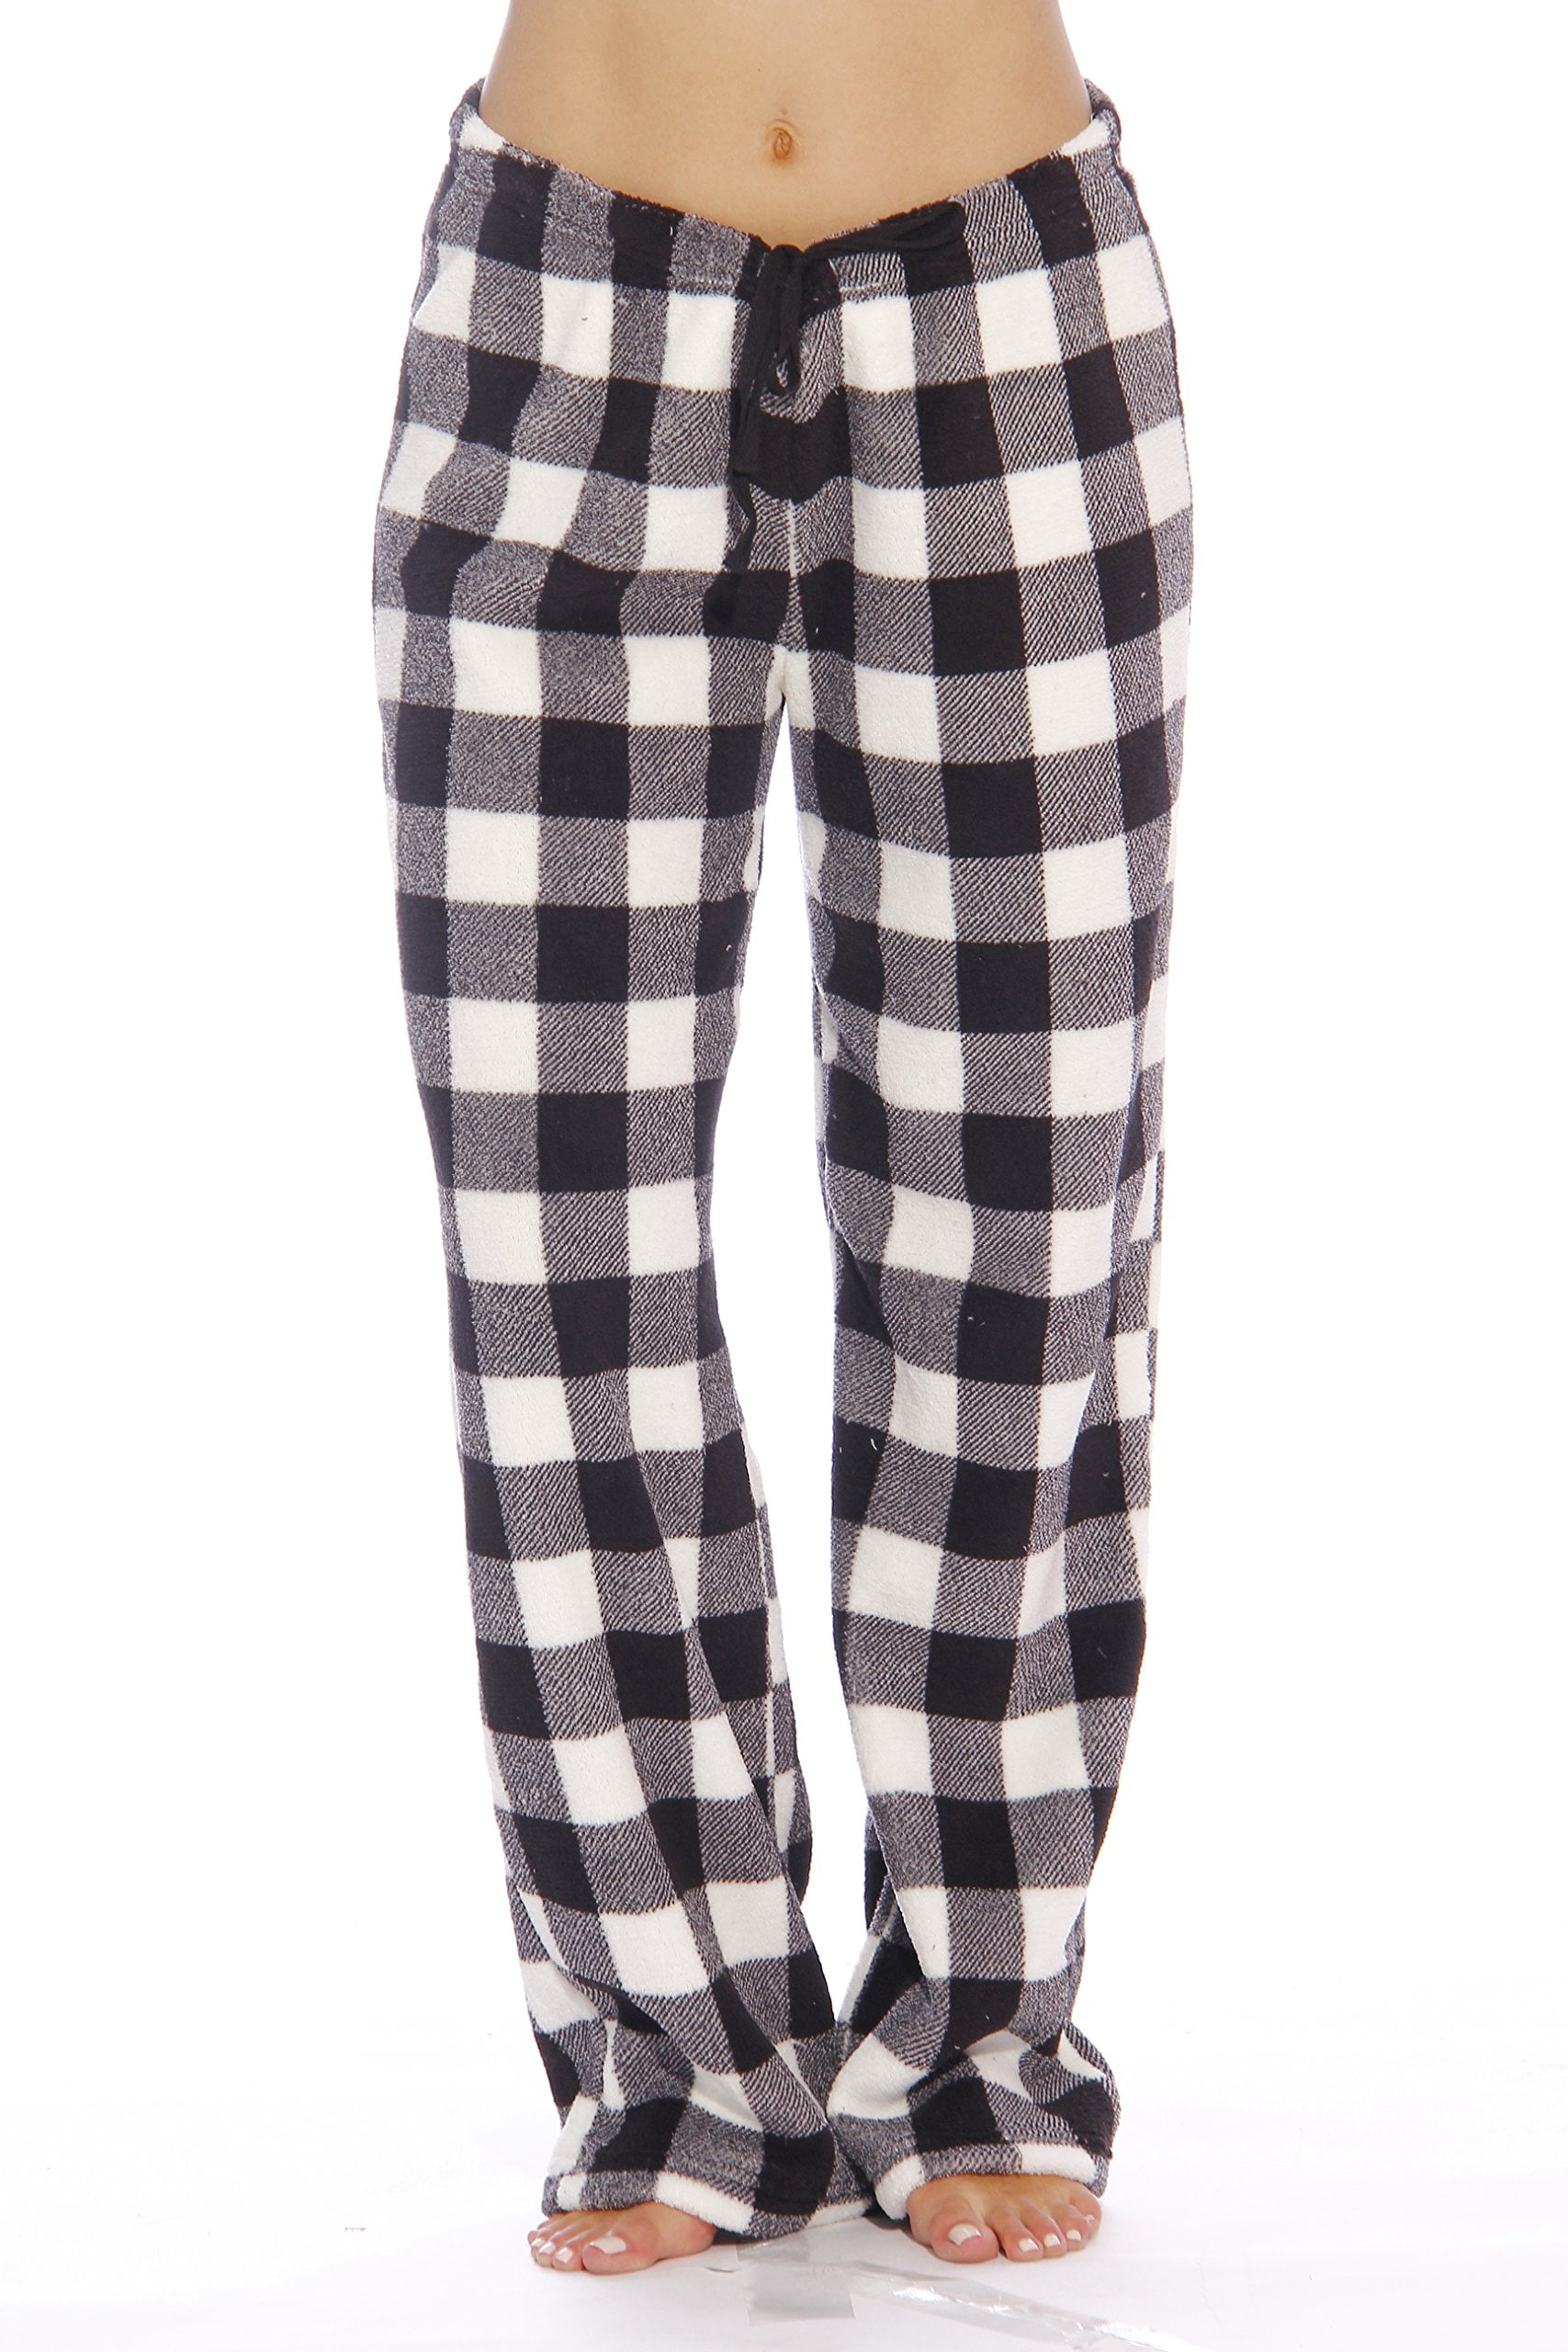 grit katastrofale Grundlægger Plaid Plush Fleece Pajama Pant (Buffalo Plaid White, 1X) - Walmart.com